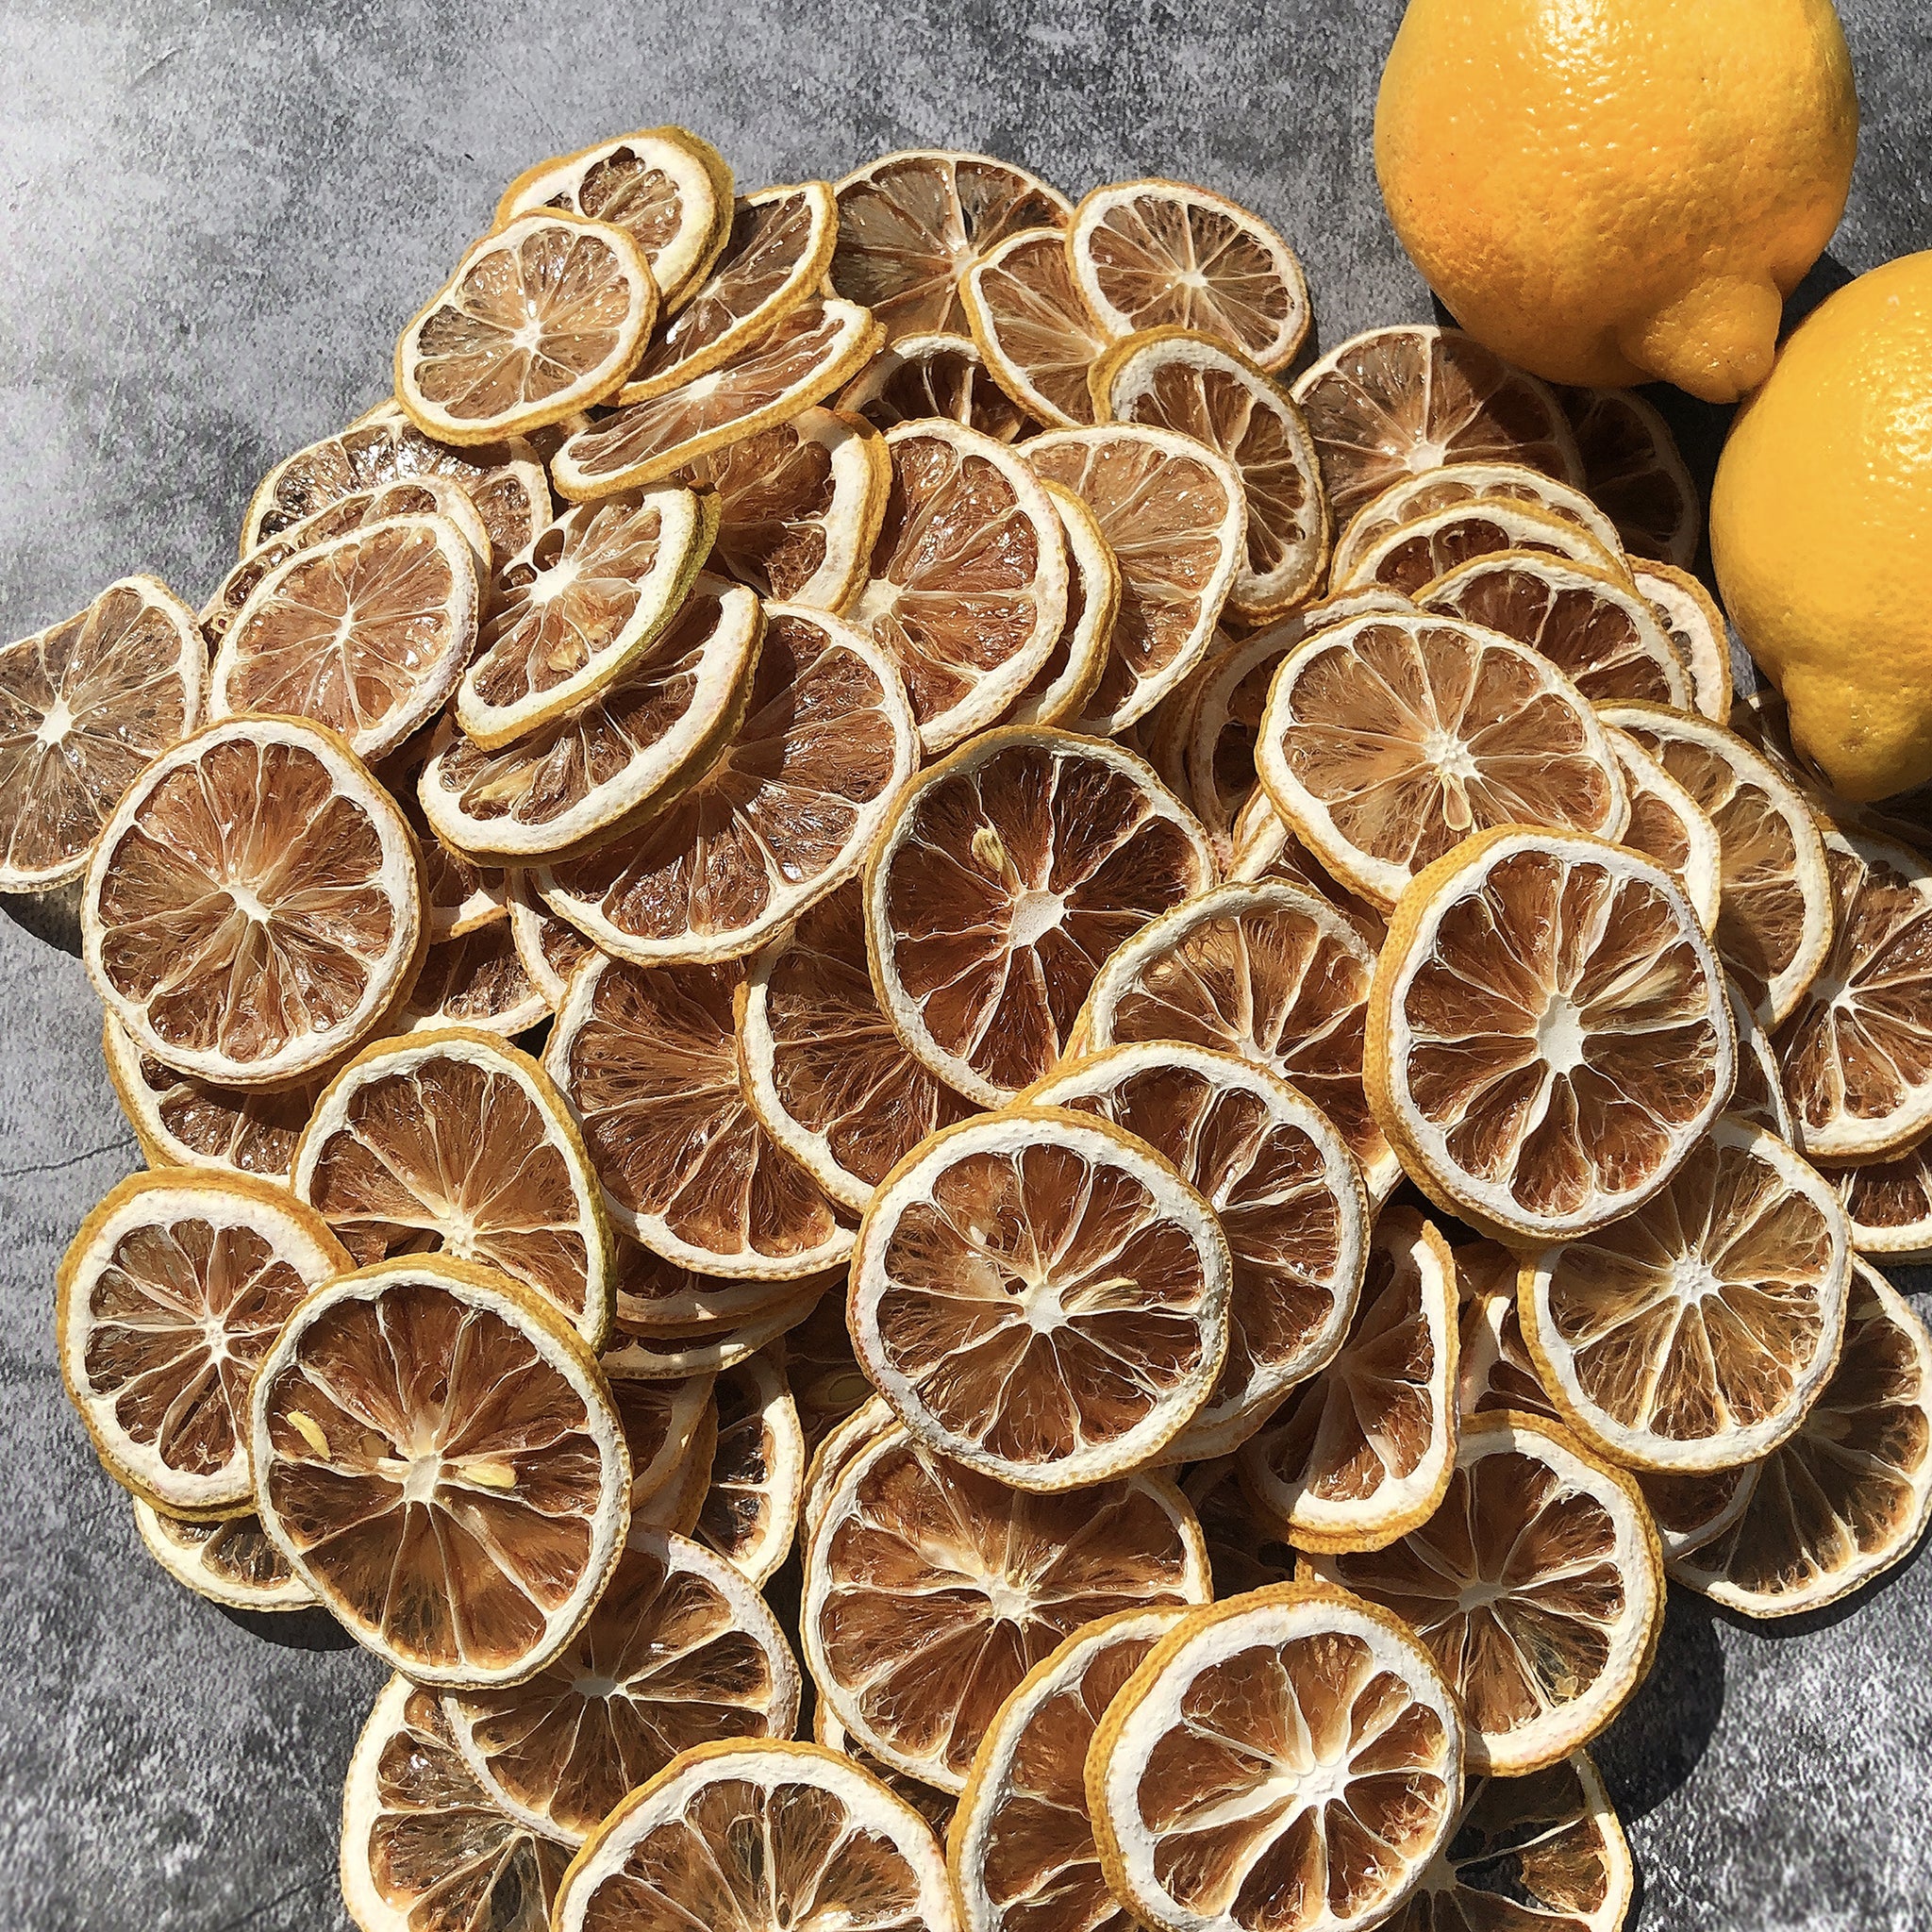 Dried Lemon Slices at Rs 65/kilogram, Dried Lemon Slices in Bijapur